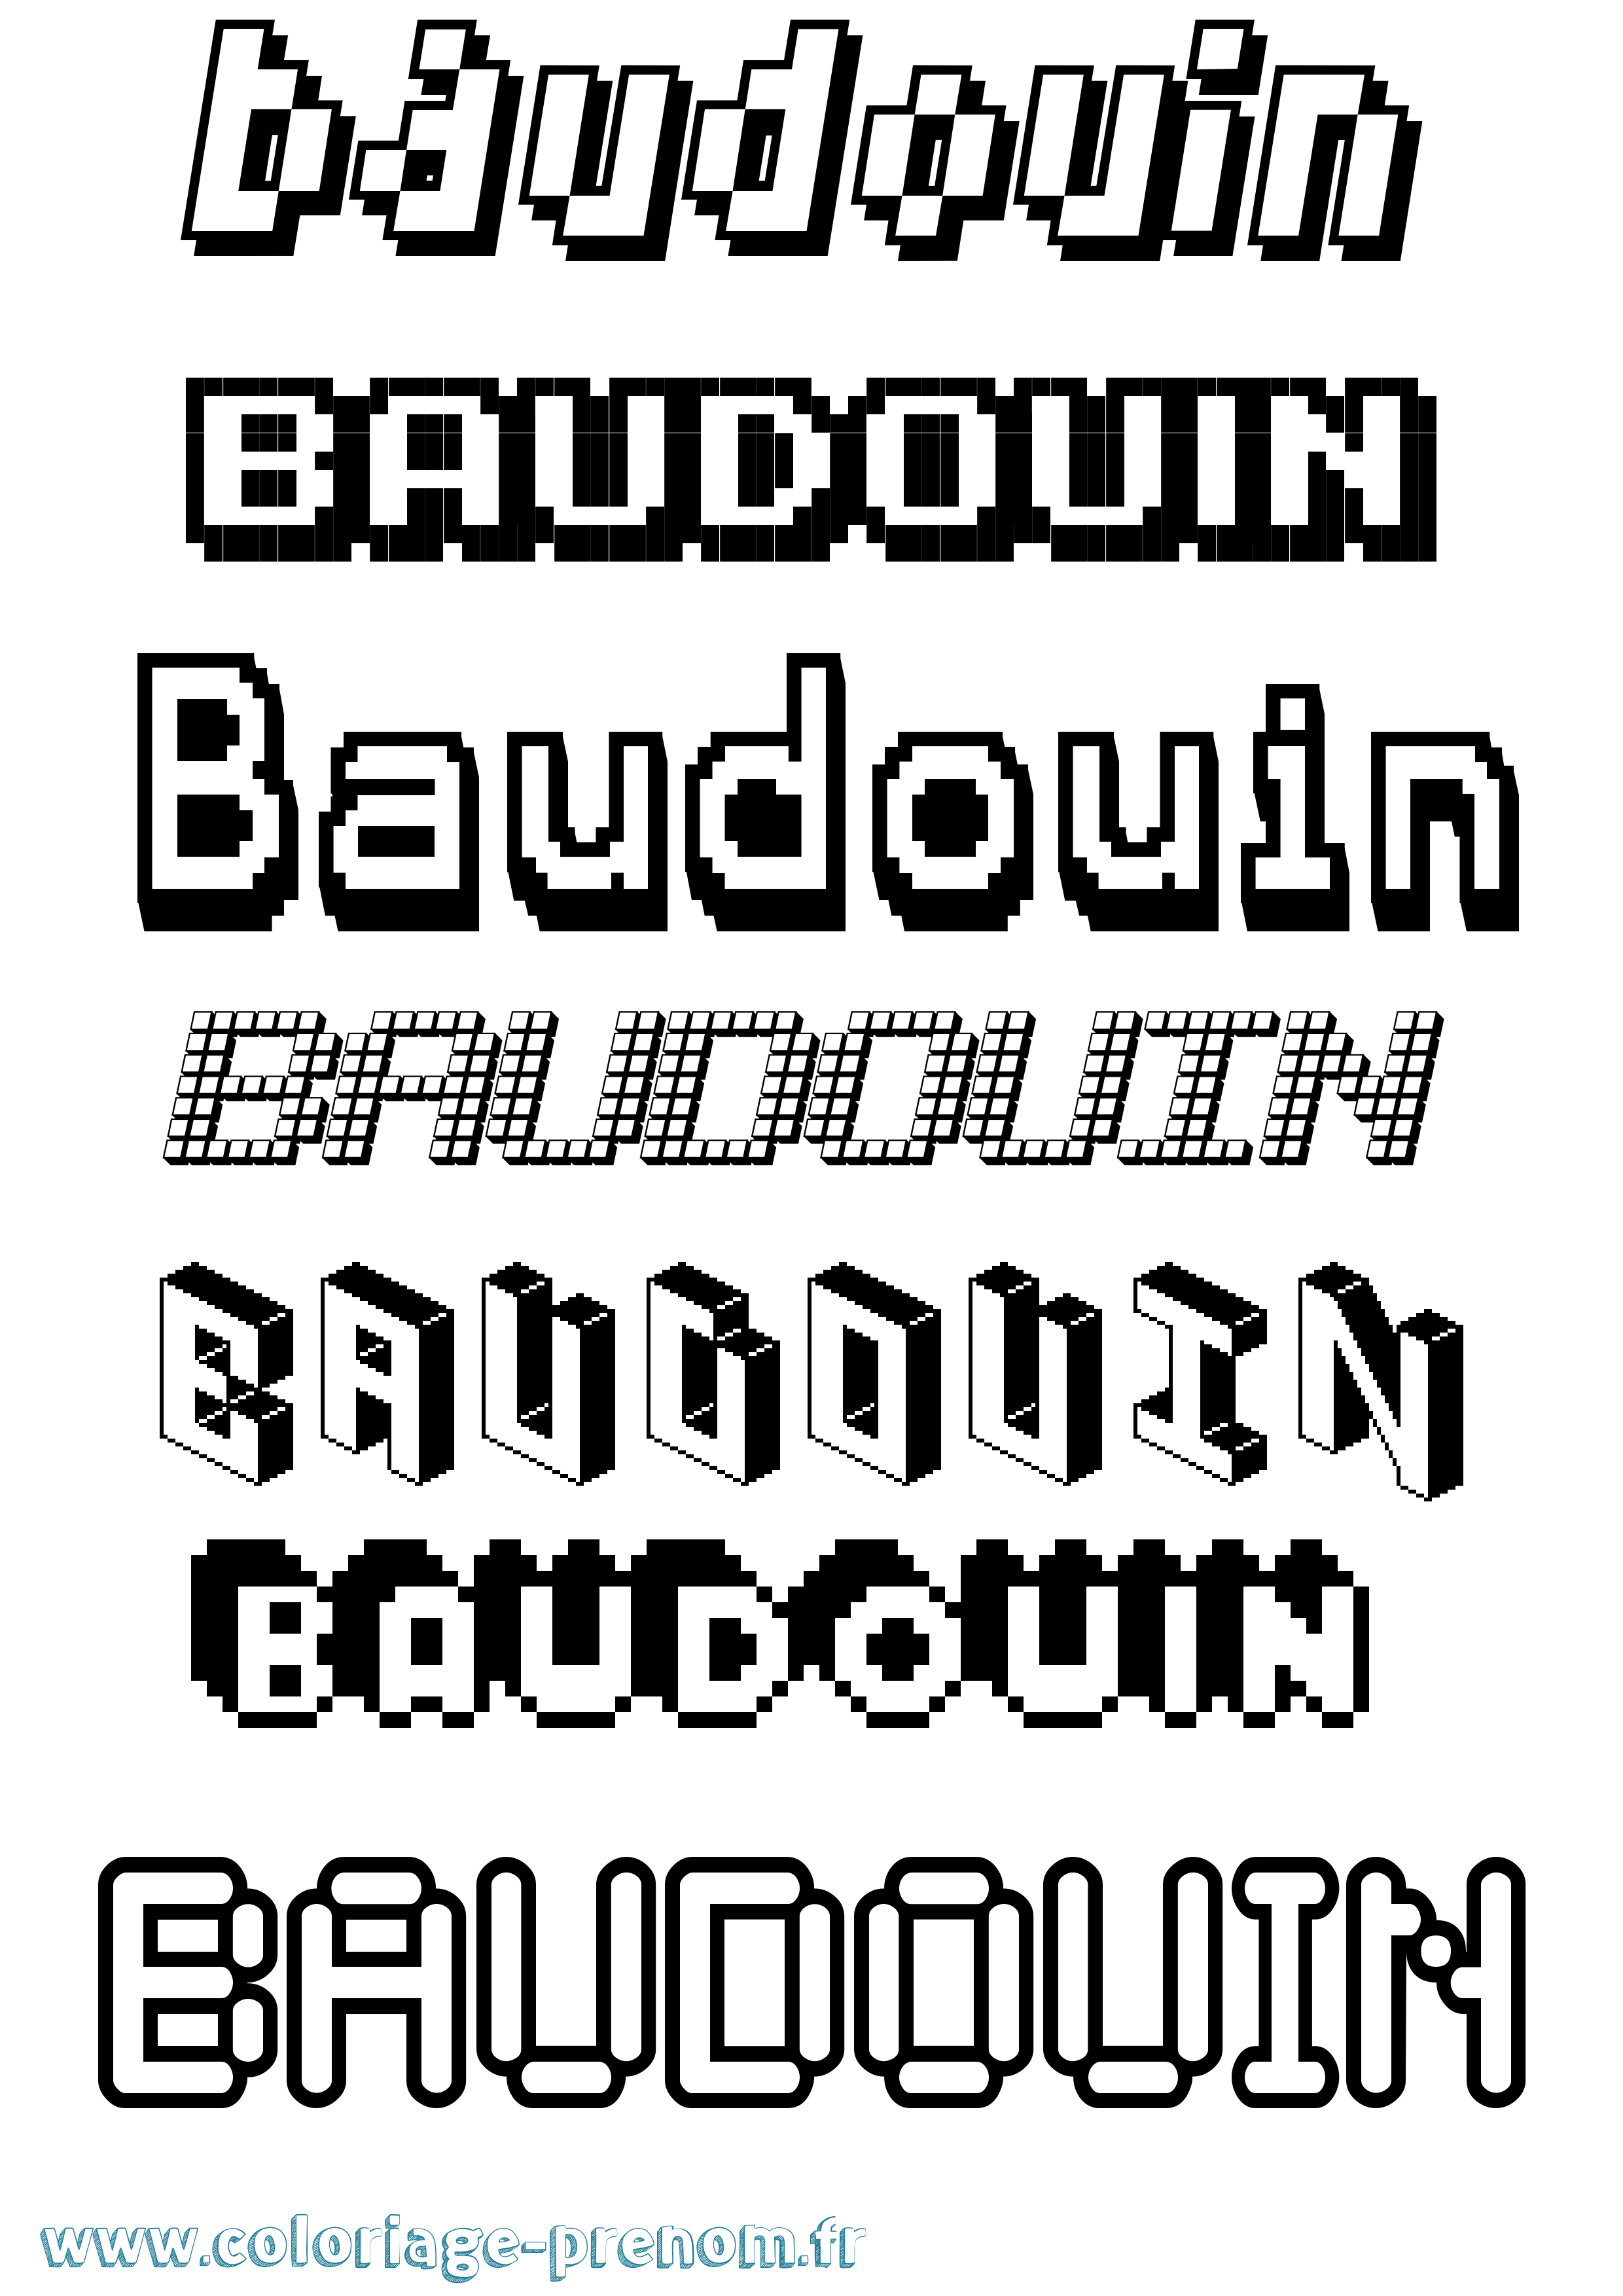 Coloriage prénom Baudouin Pixel